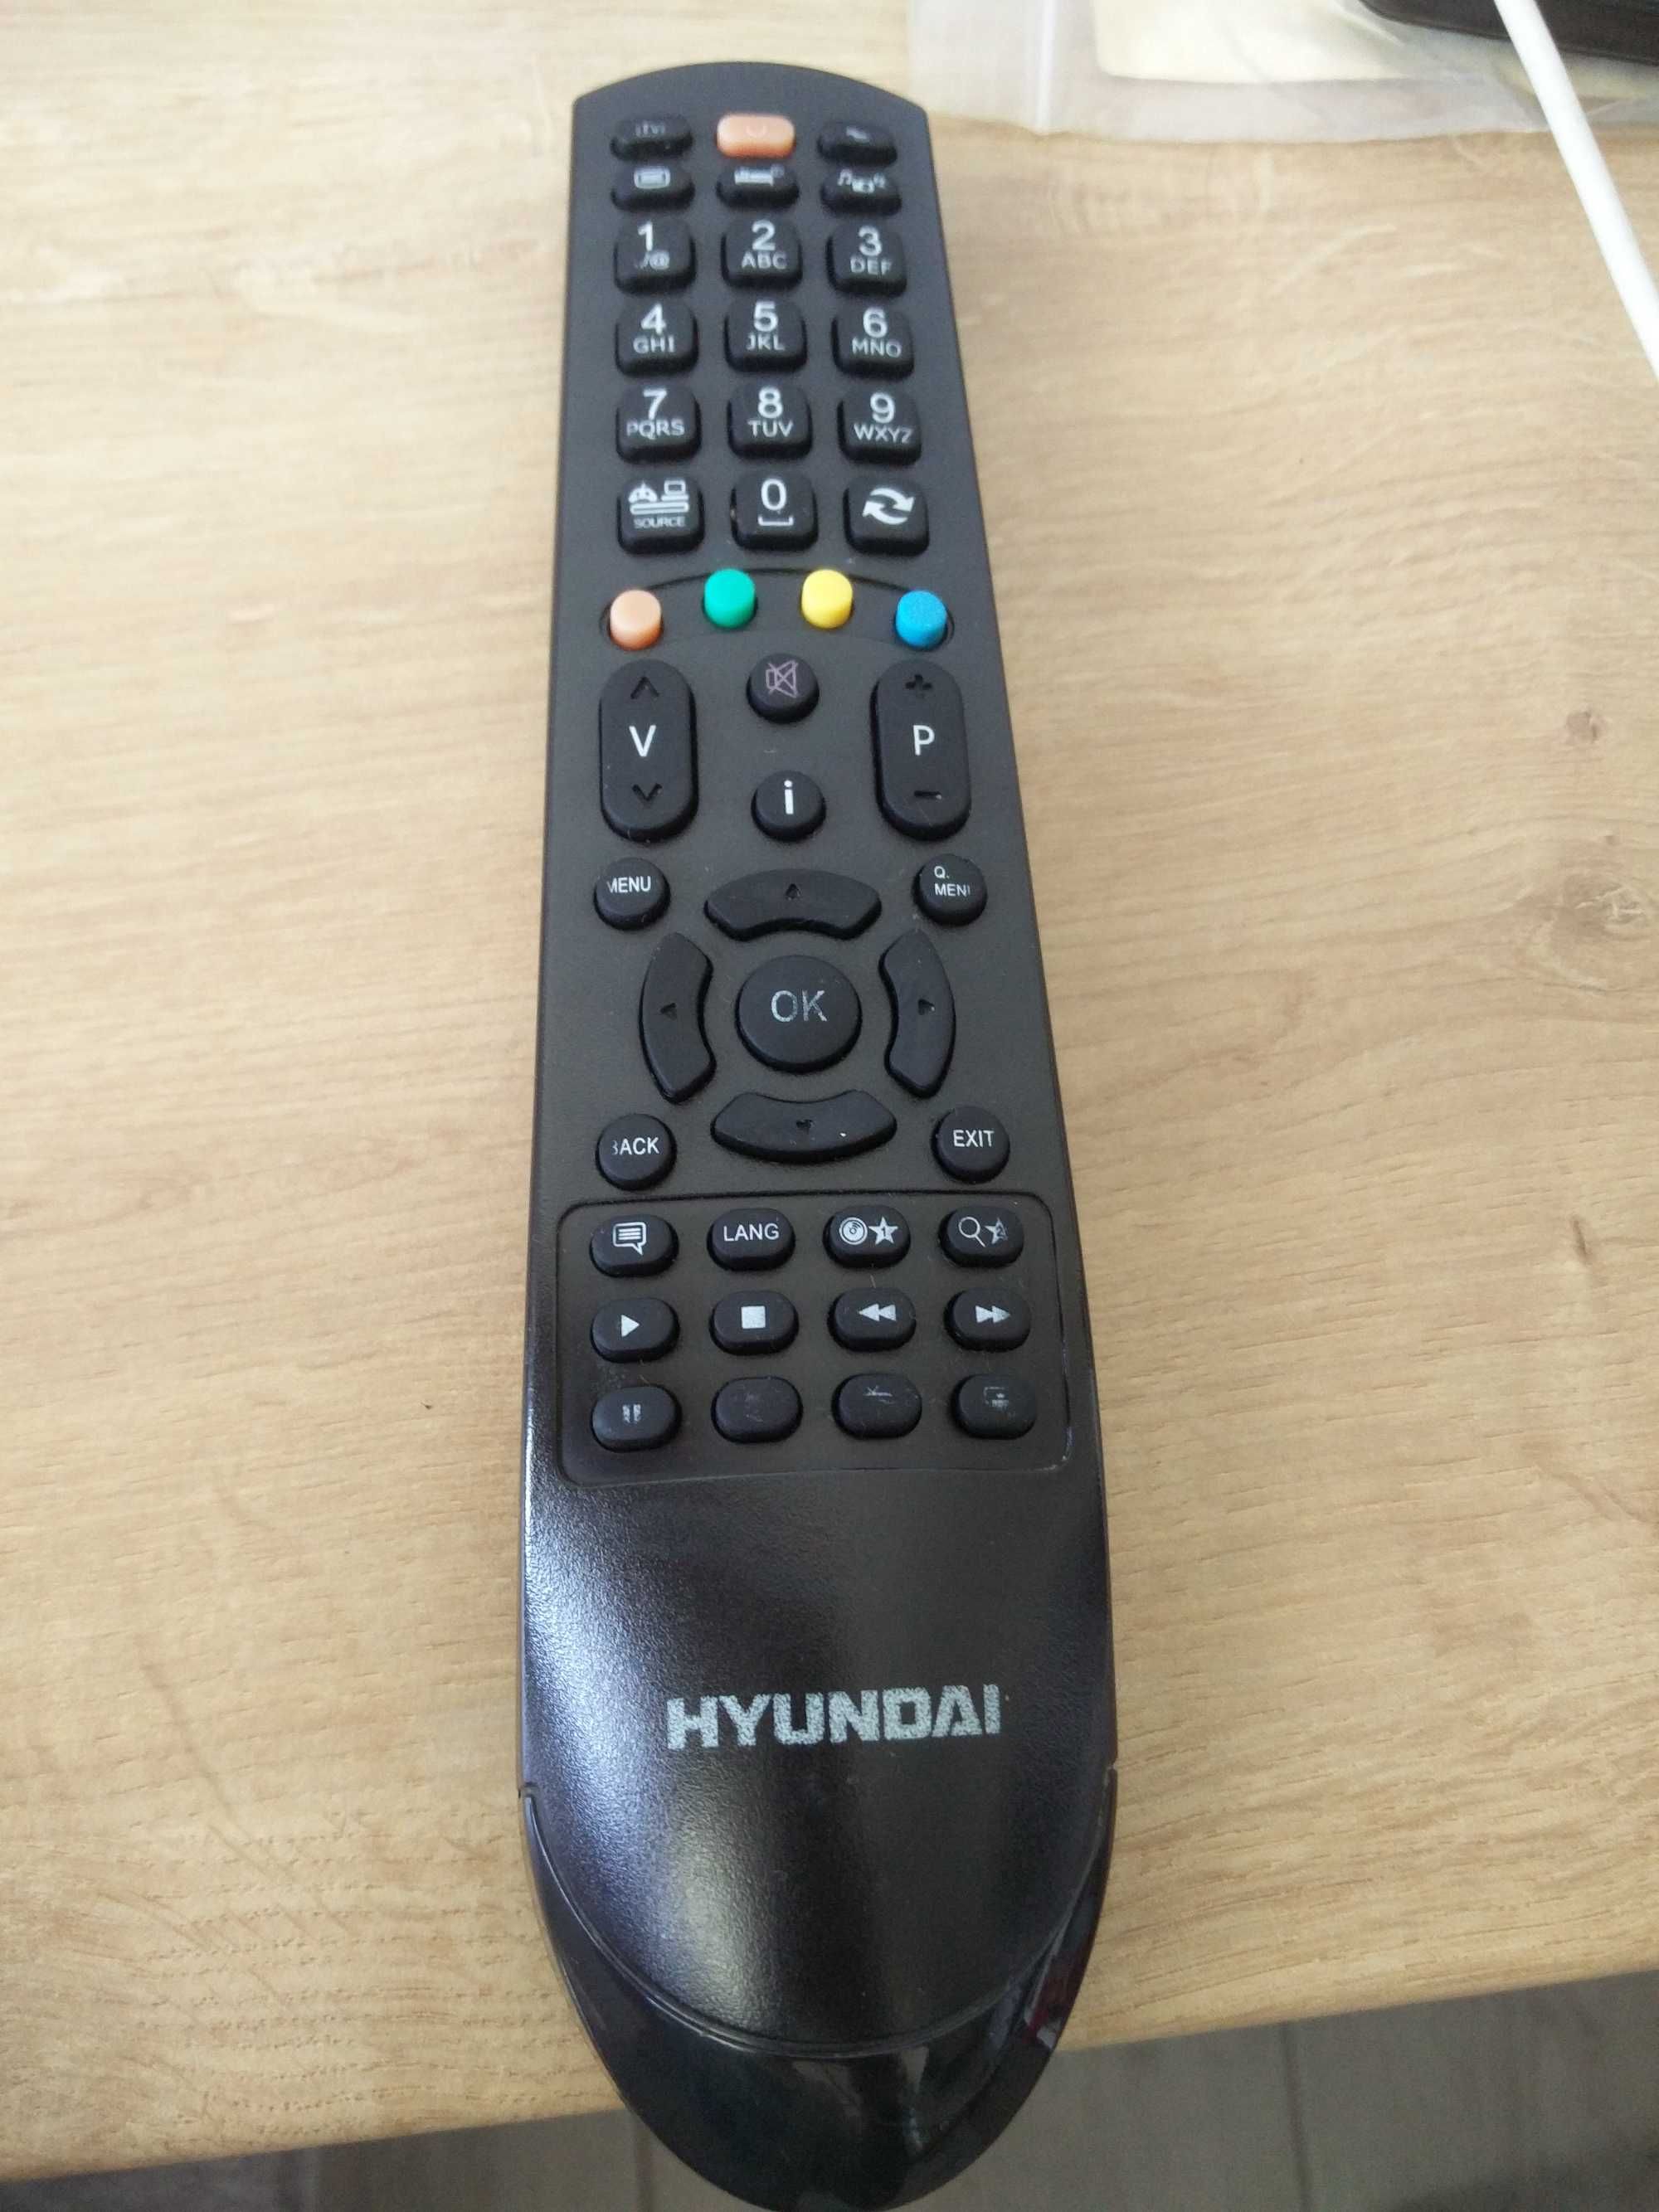 Telecomanda TV Hyundai RC4900 pt DLH32195 MP4CR si altele